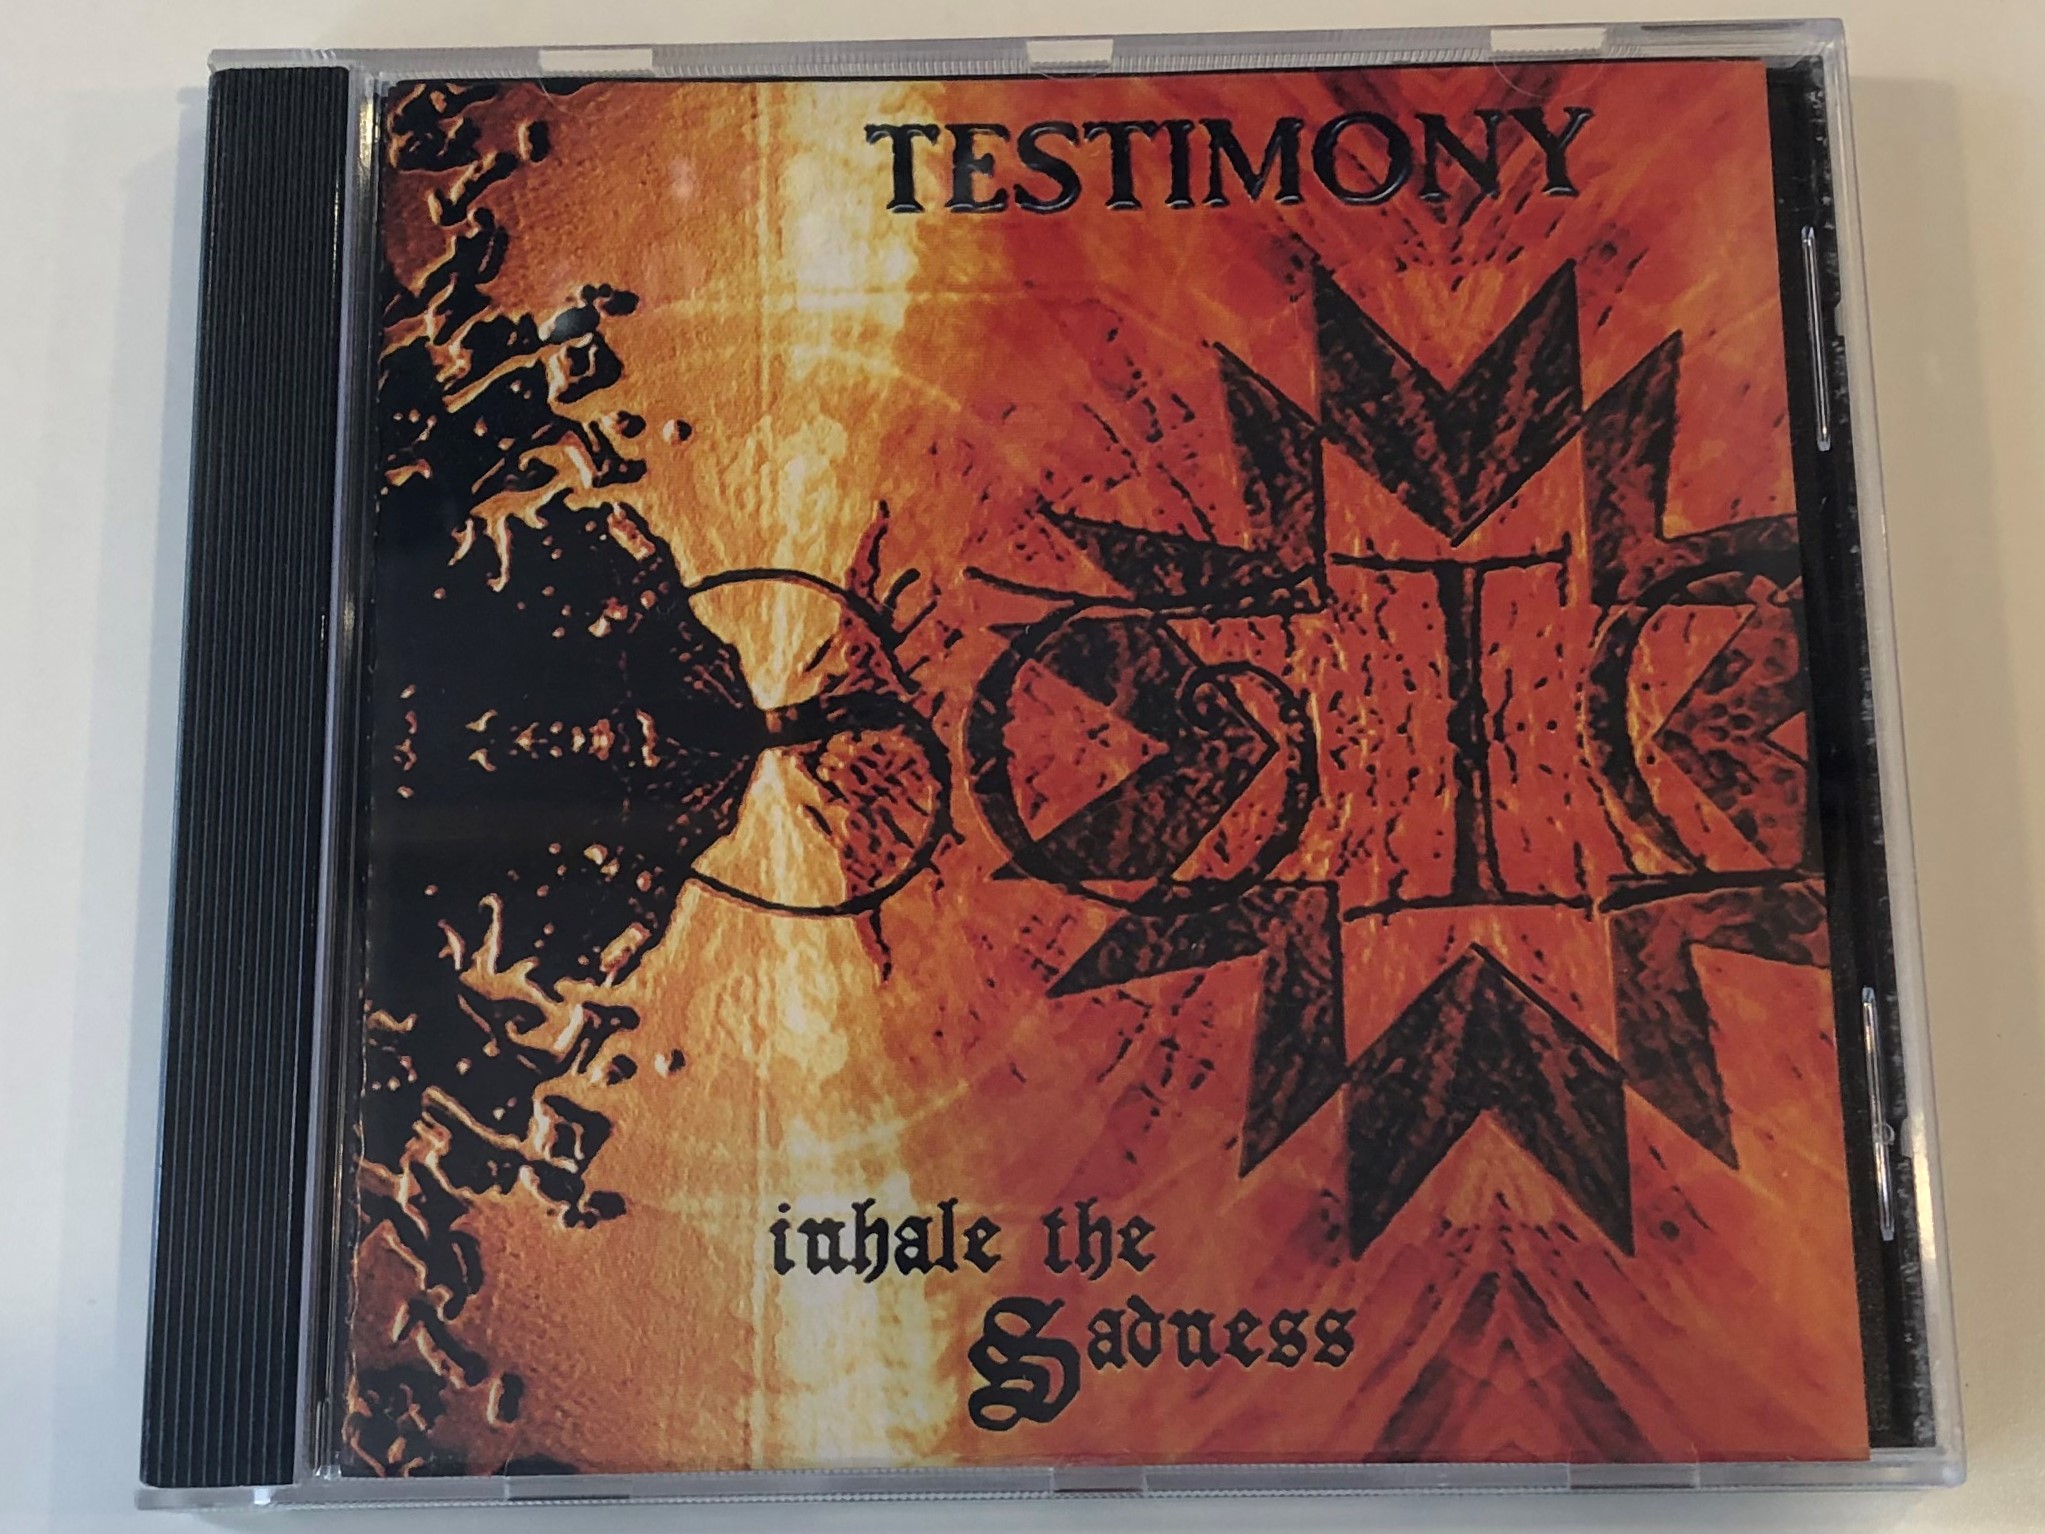 testimony-inhale-the-sadness-nephilim-records-audio-cd-2000-nepcd012-1-.jpg